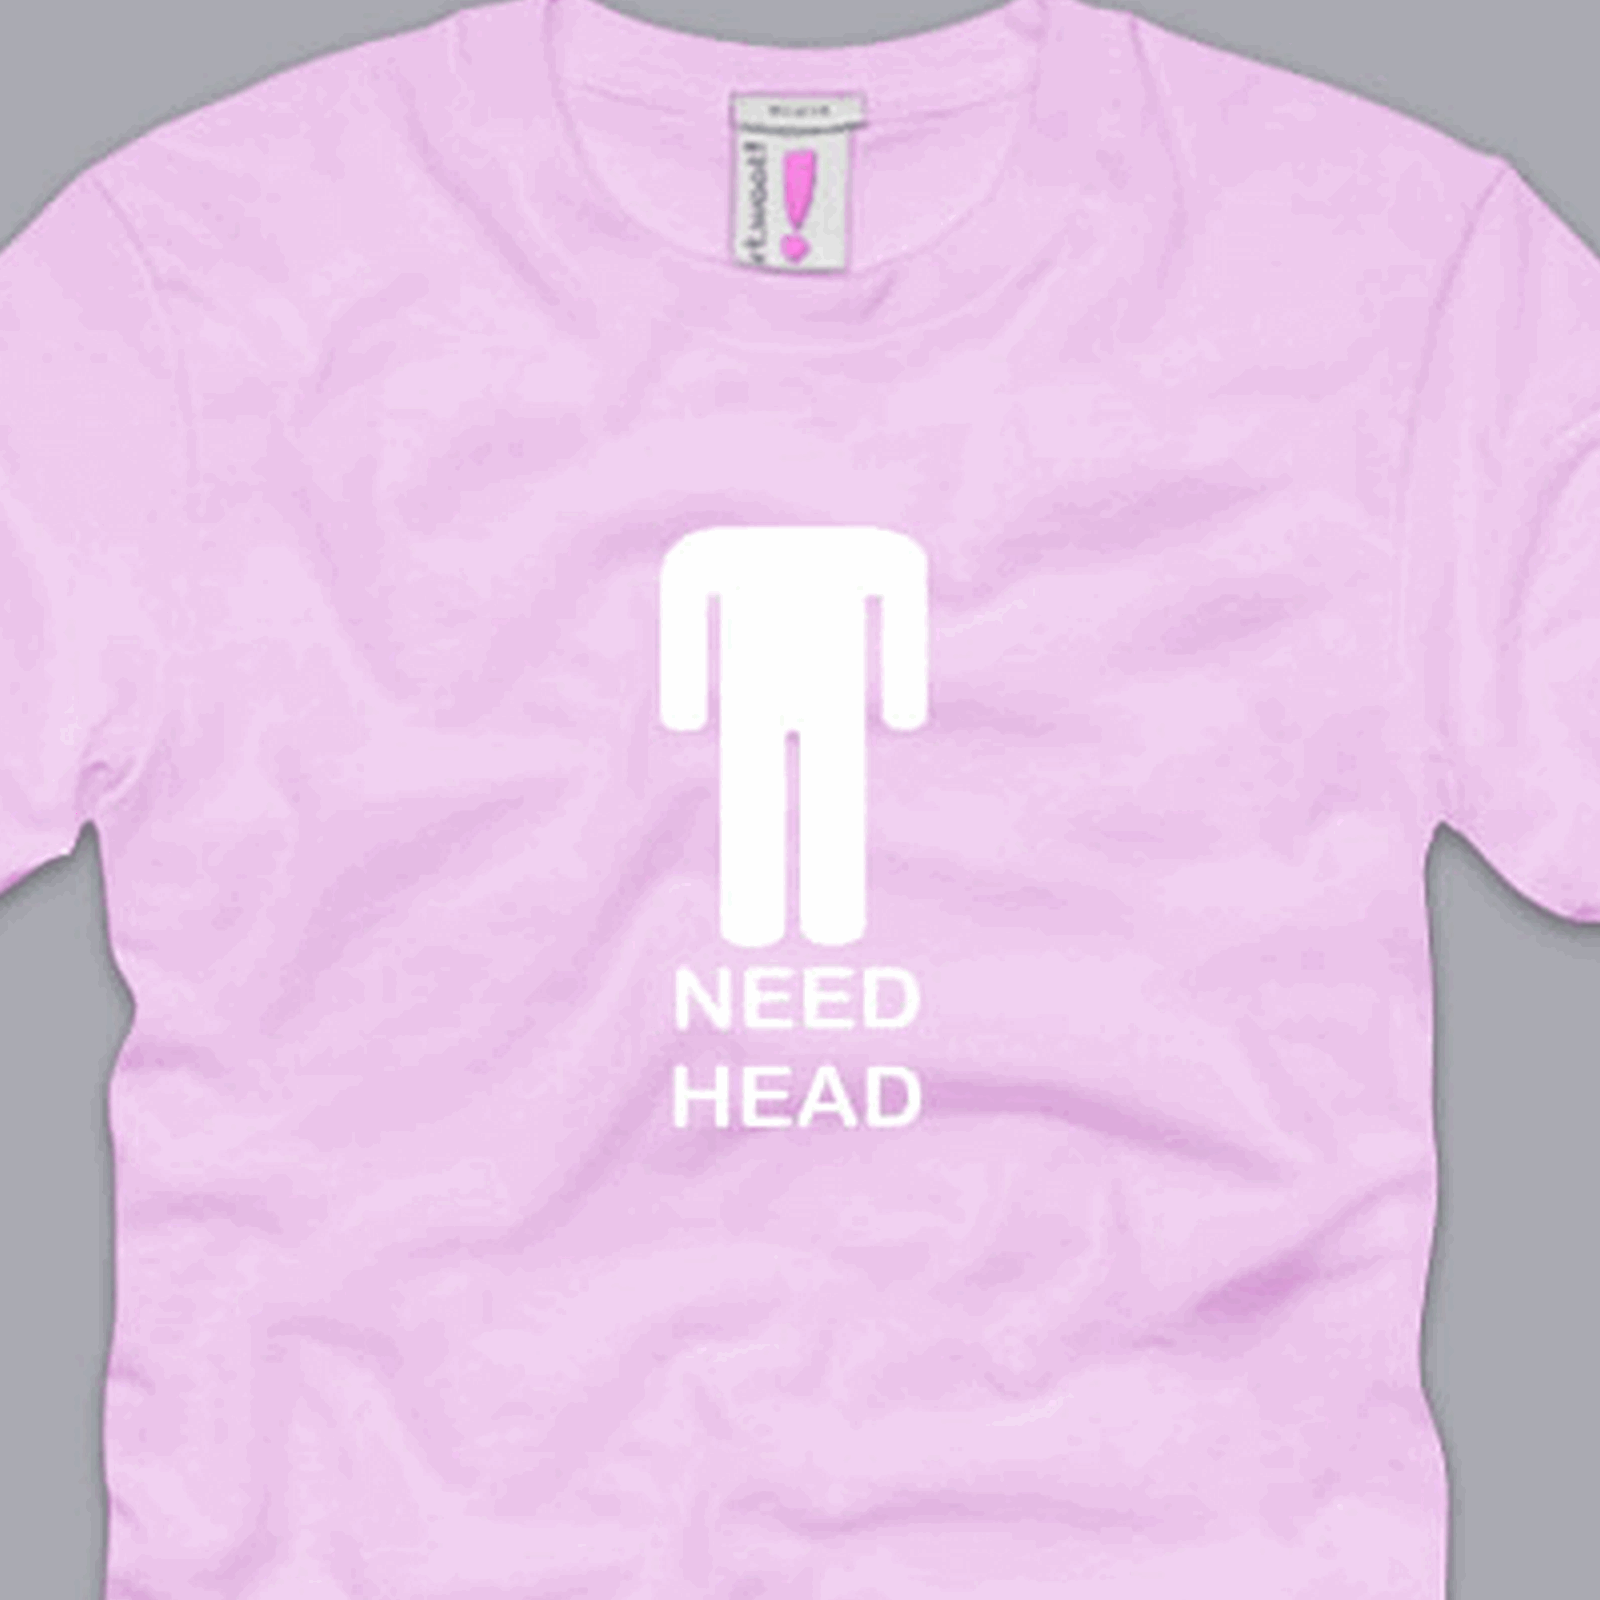 Need Head S M L Xl 2xl 3xl T Shirt Funny Awesome Sex Crude Rude Adult Humor Tee Ebay